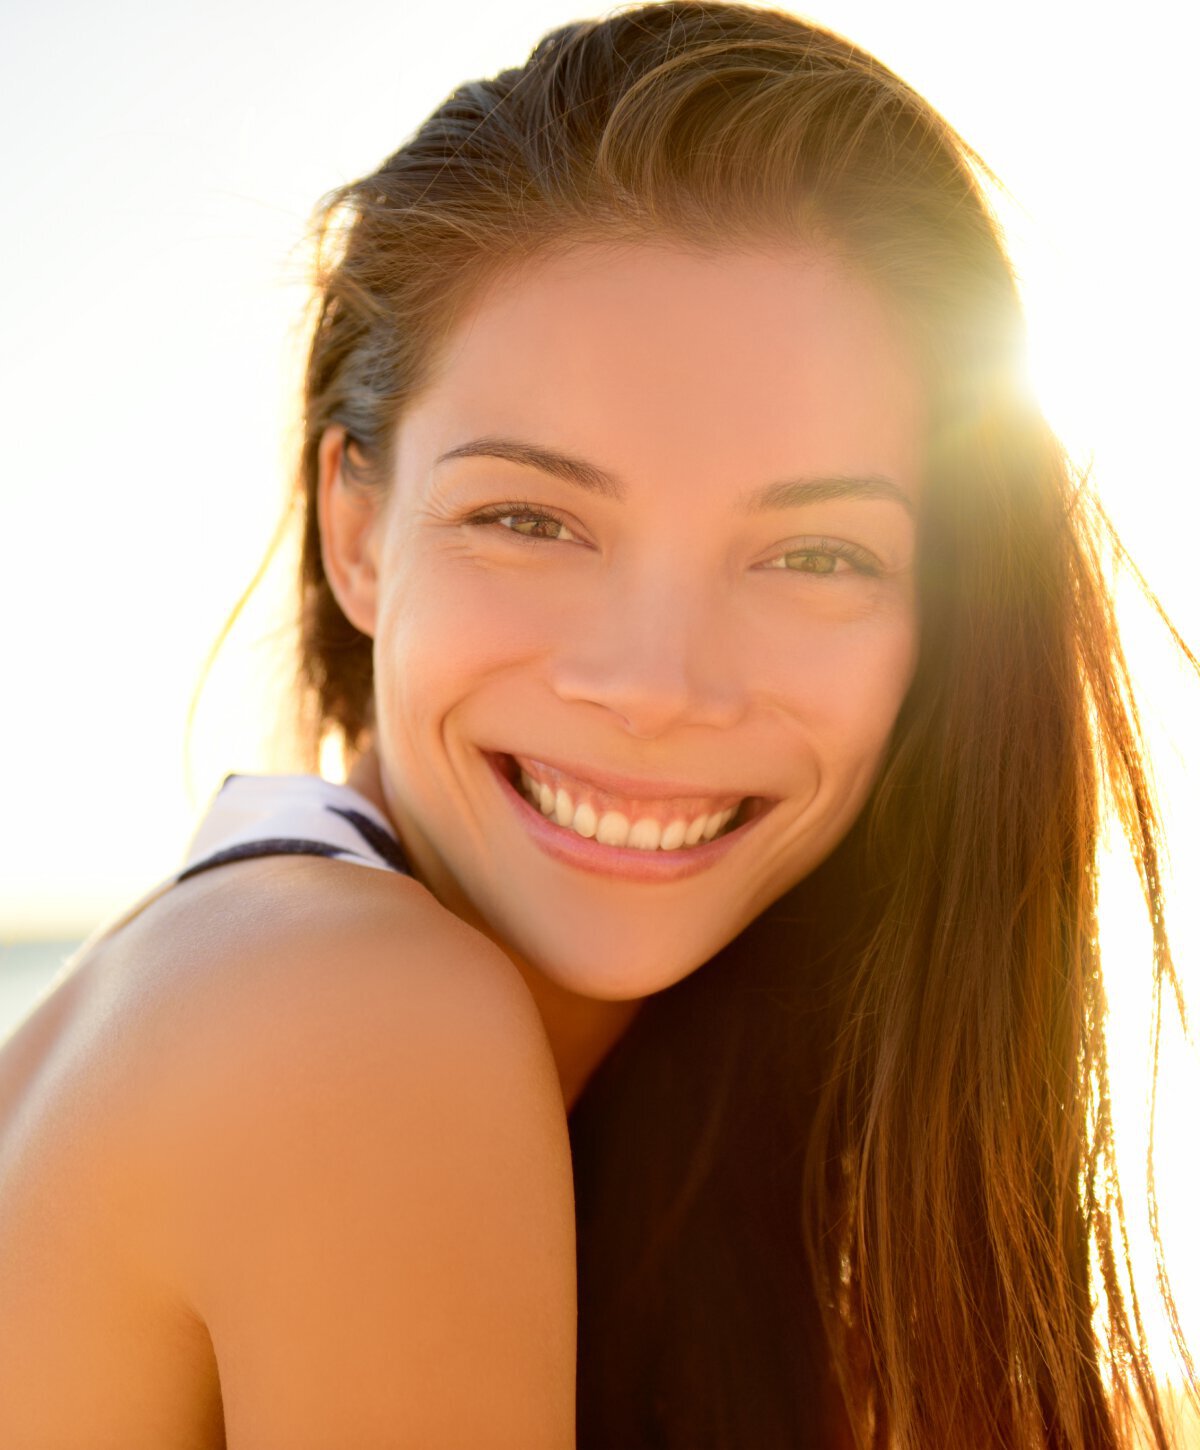 Ponte Vedra Beach Laser Acne Treatment model smiling